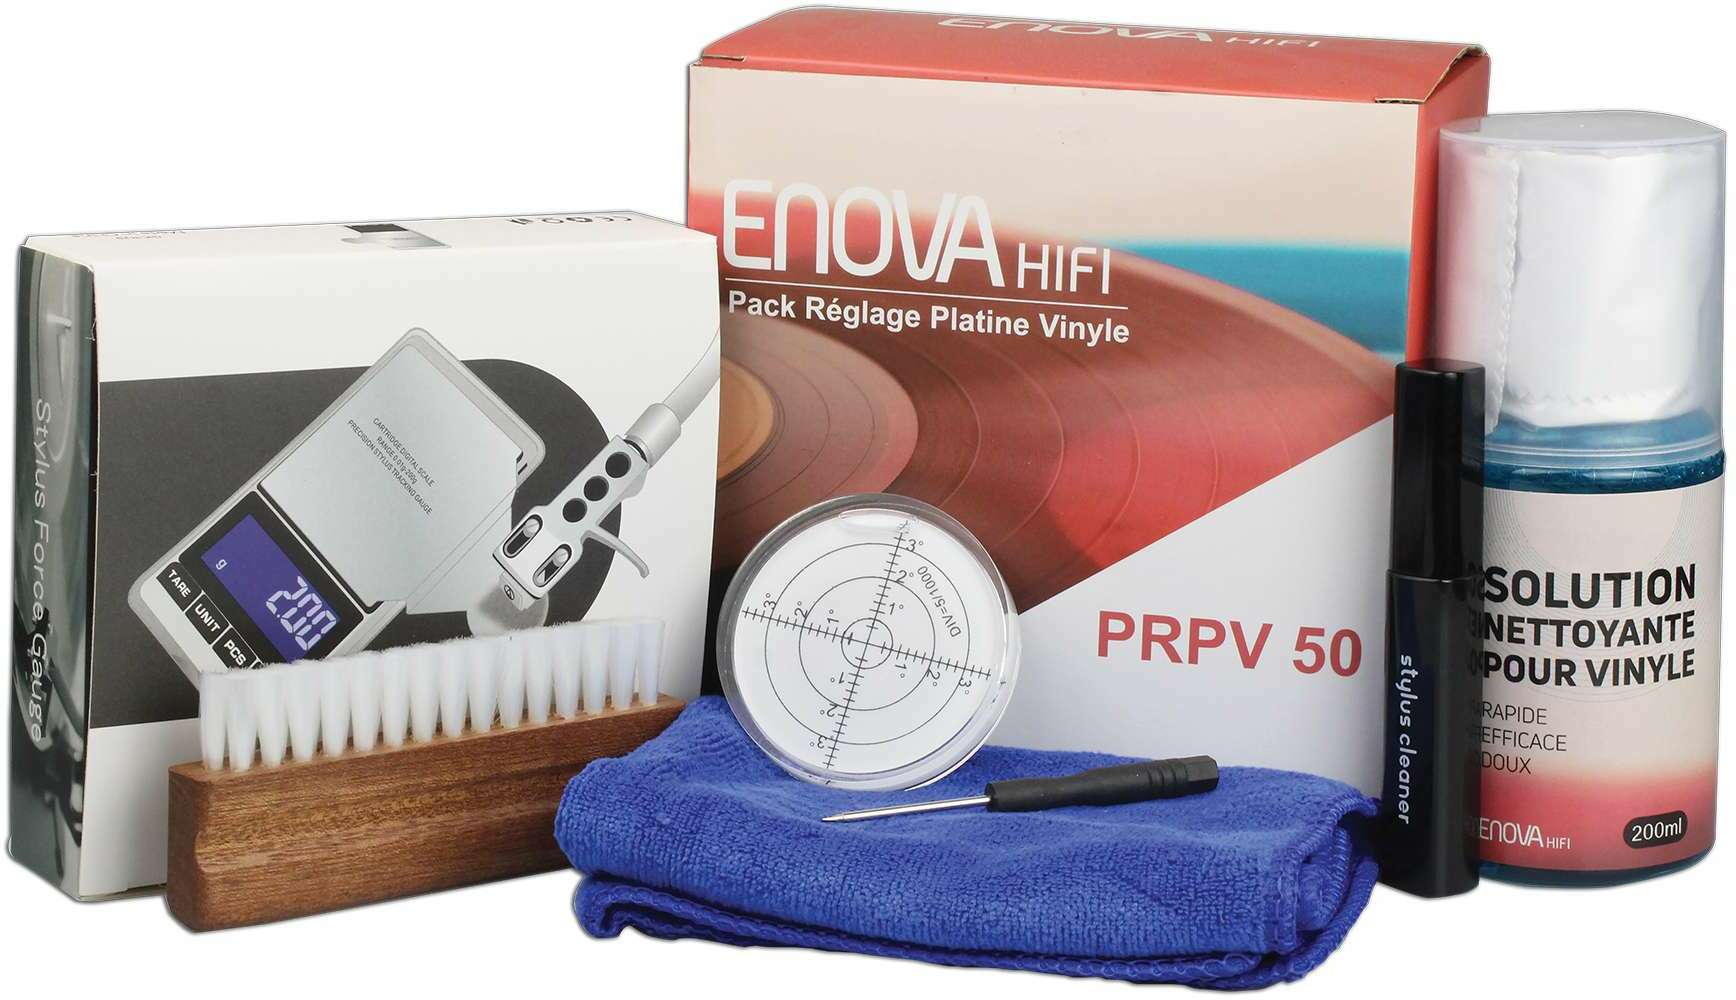 Enova Hifi Pack Reglage Platine Vinyle - Prpv 50 - Cleaning kit - Main picture